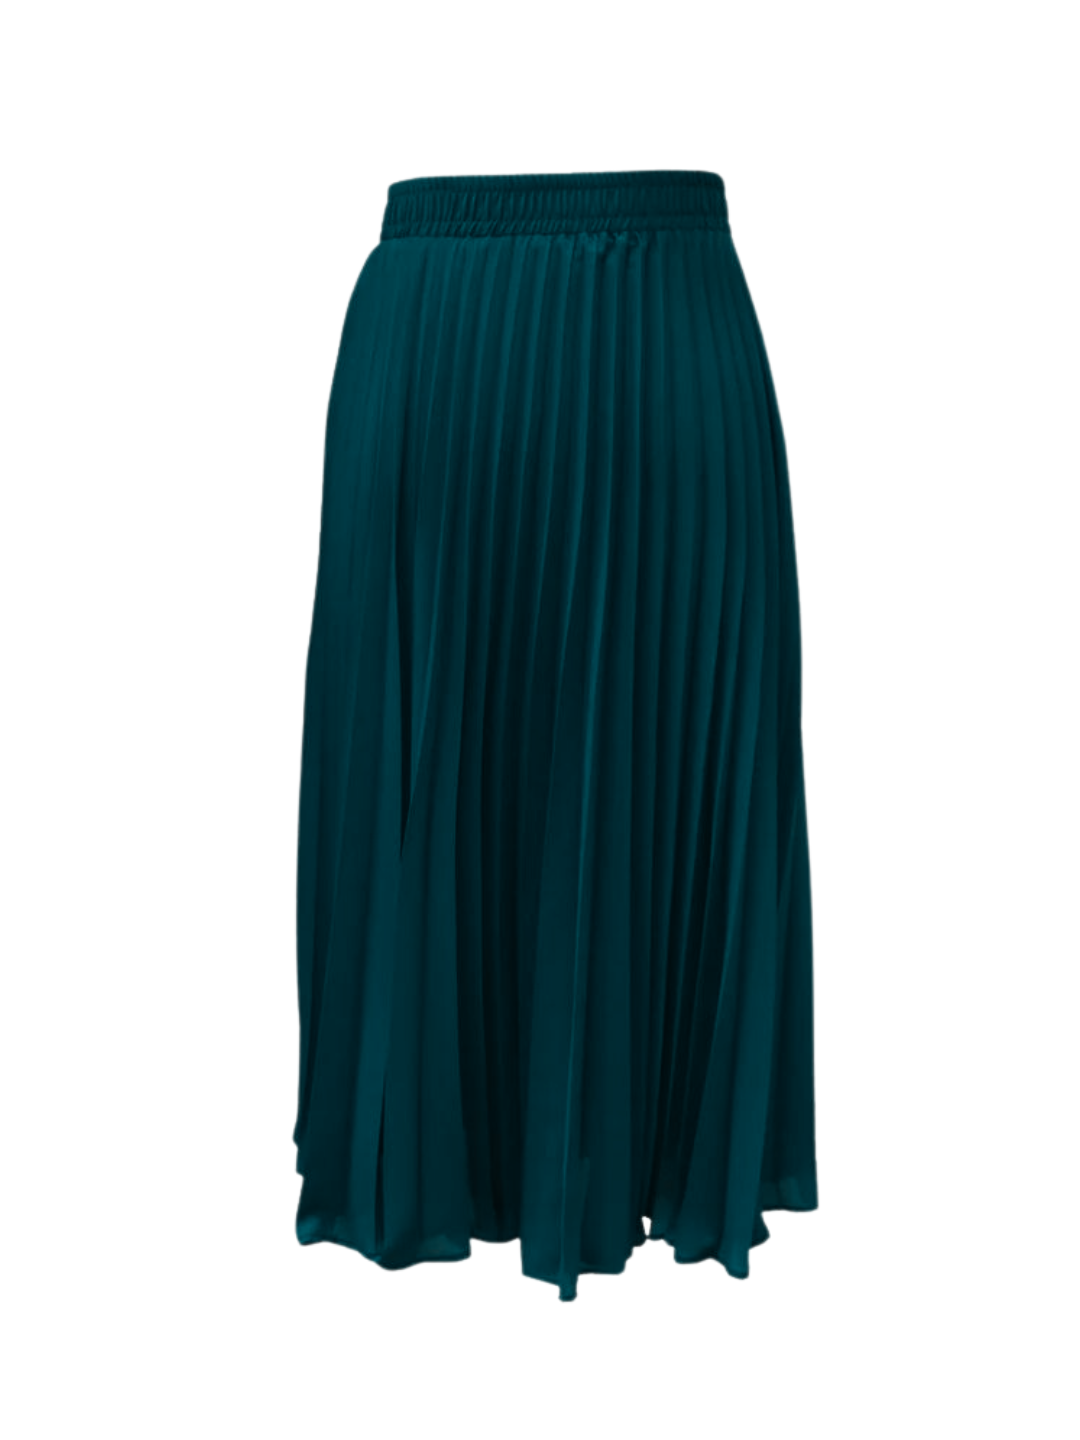 Coachella Skirt Mid Length (Forest Green)